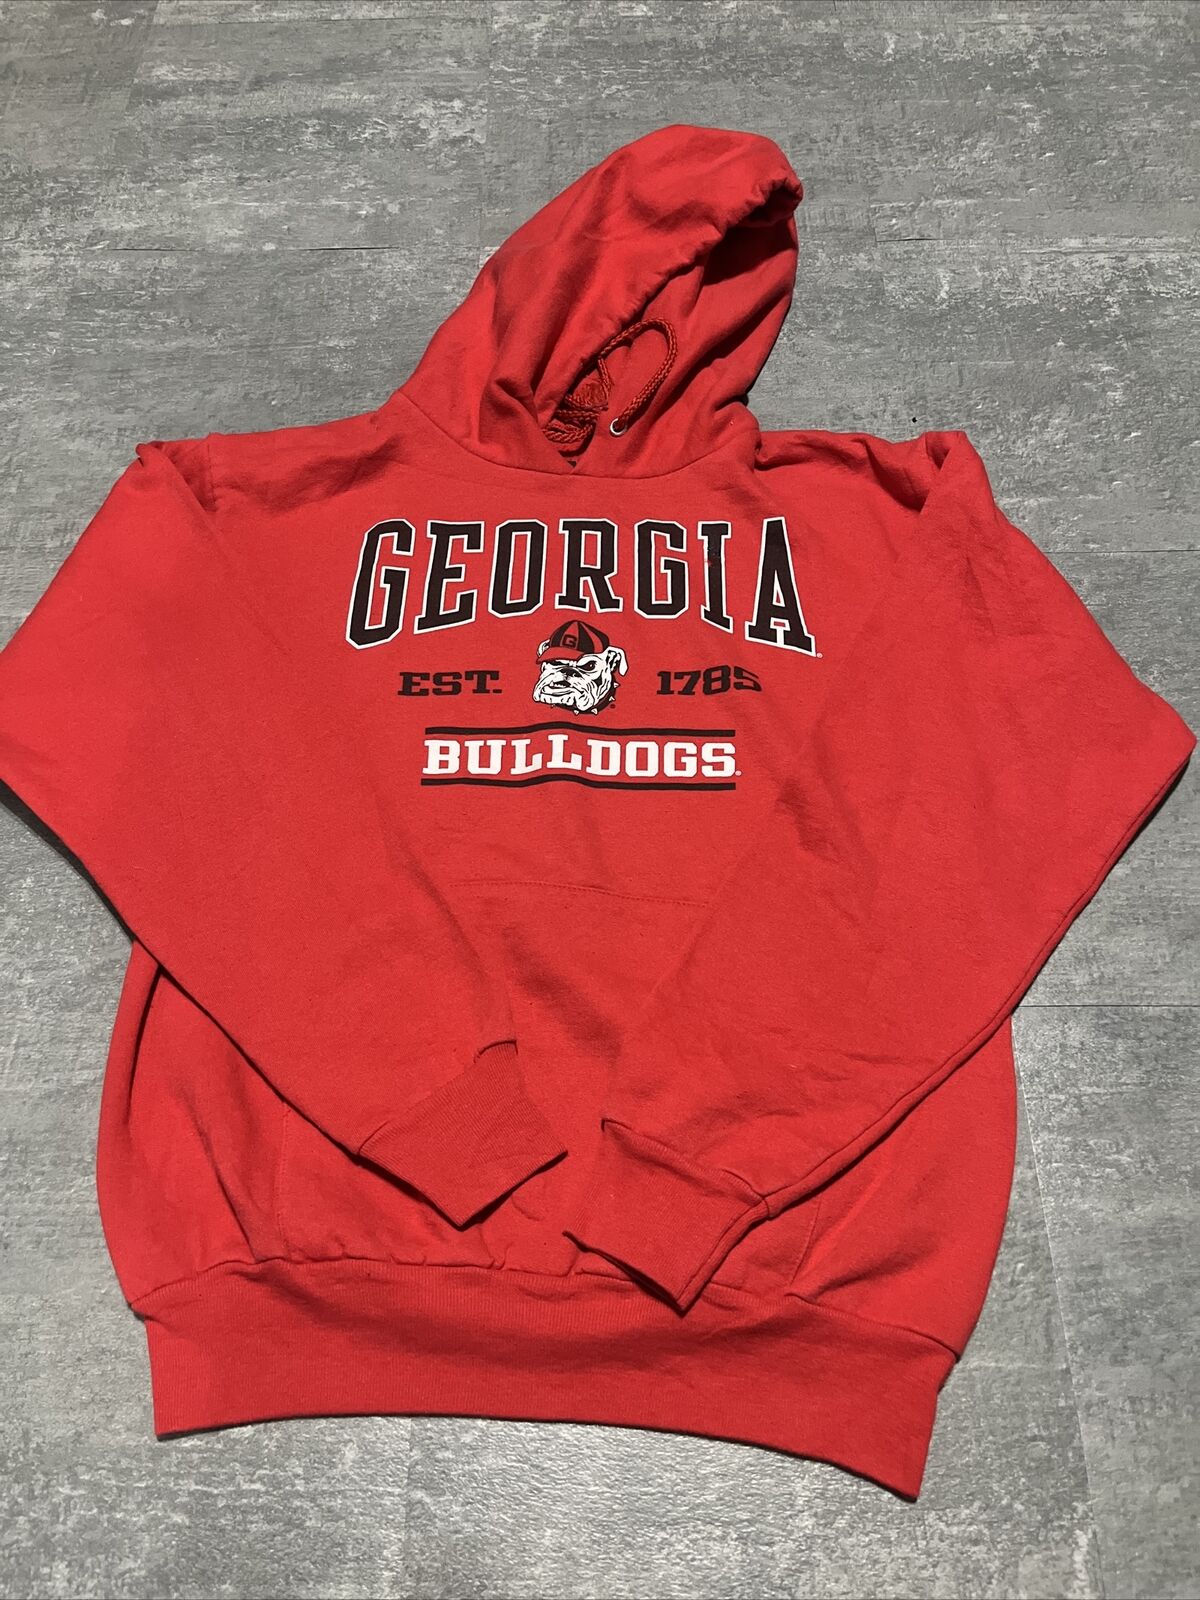 Georgia Bulldogs Vintage Russell Athletic Sweatshirt Men S Red